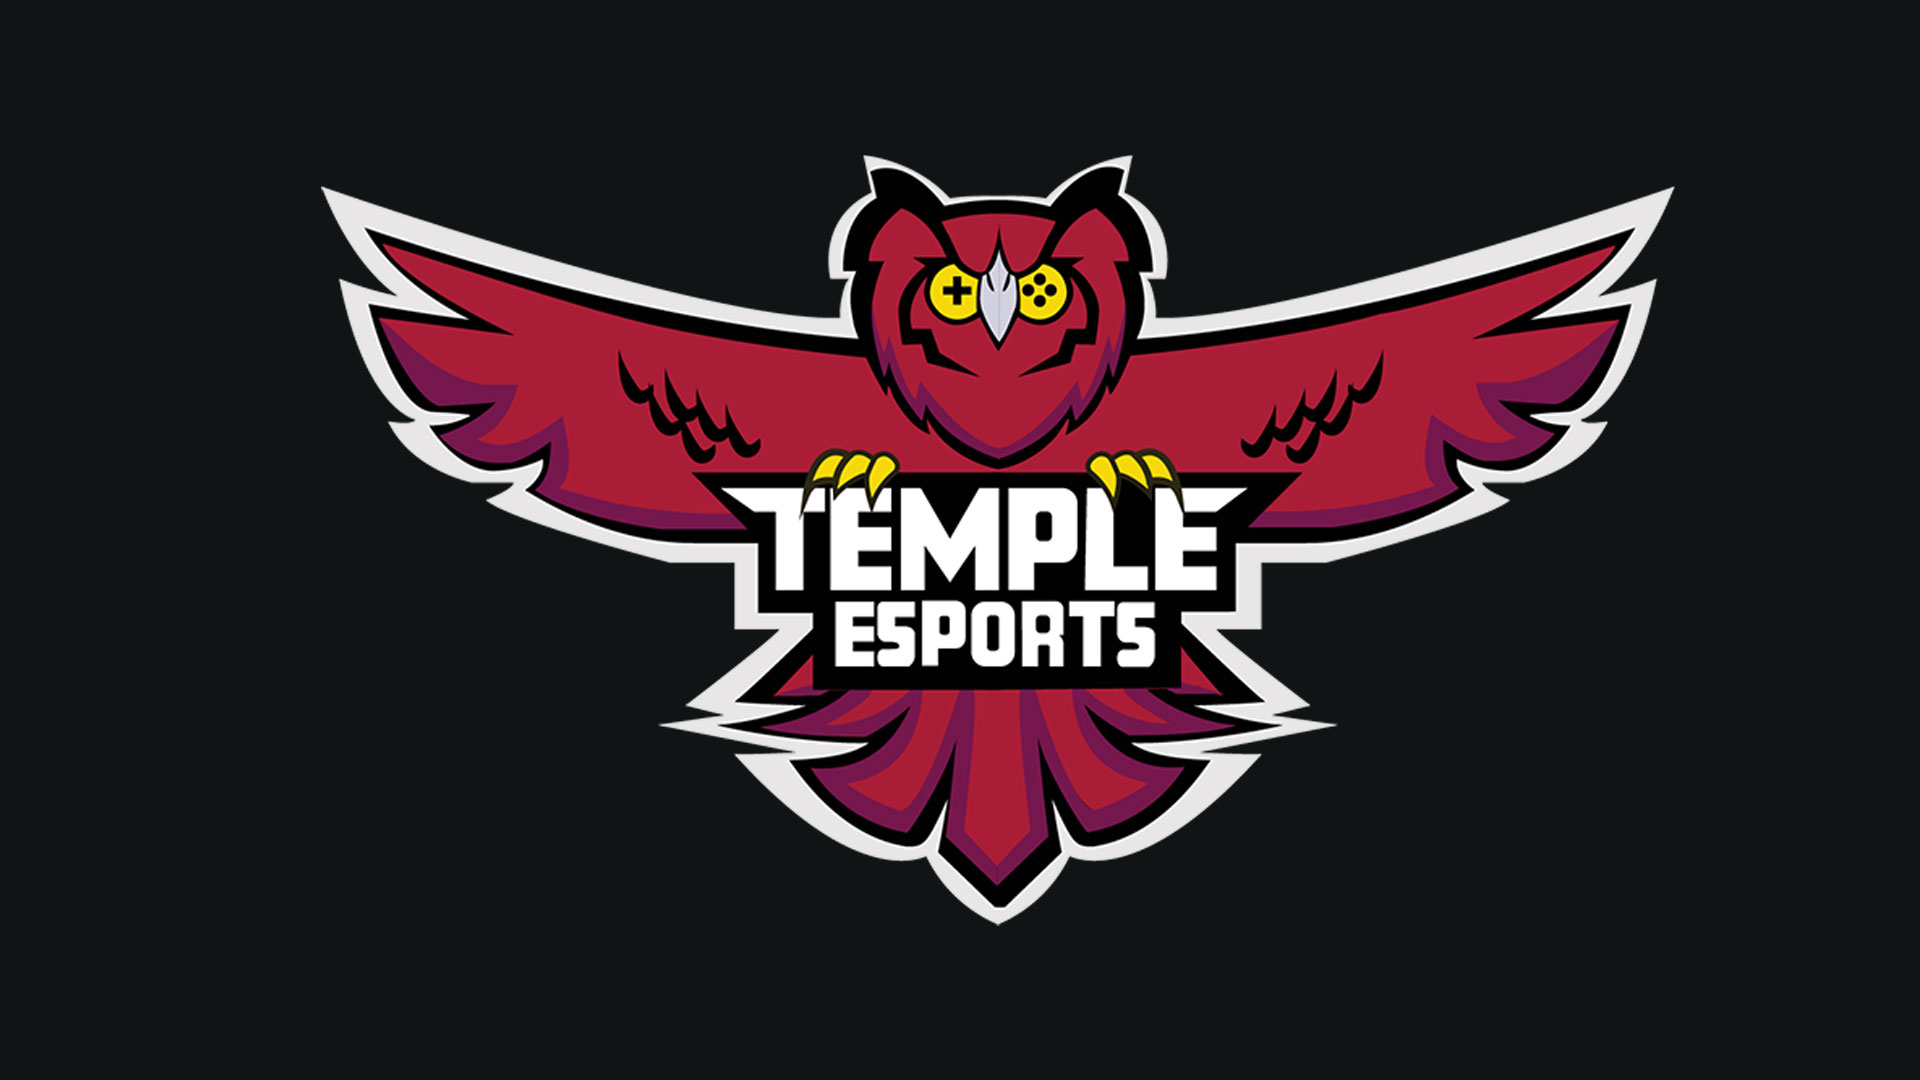 Temple esports logo